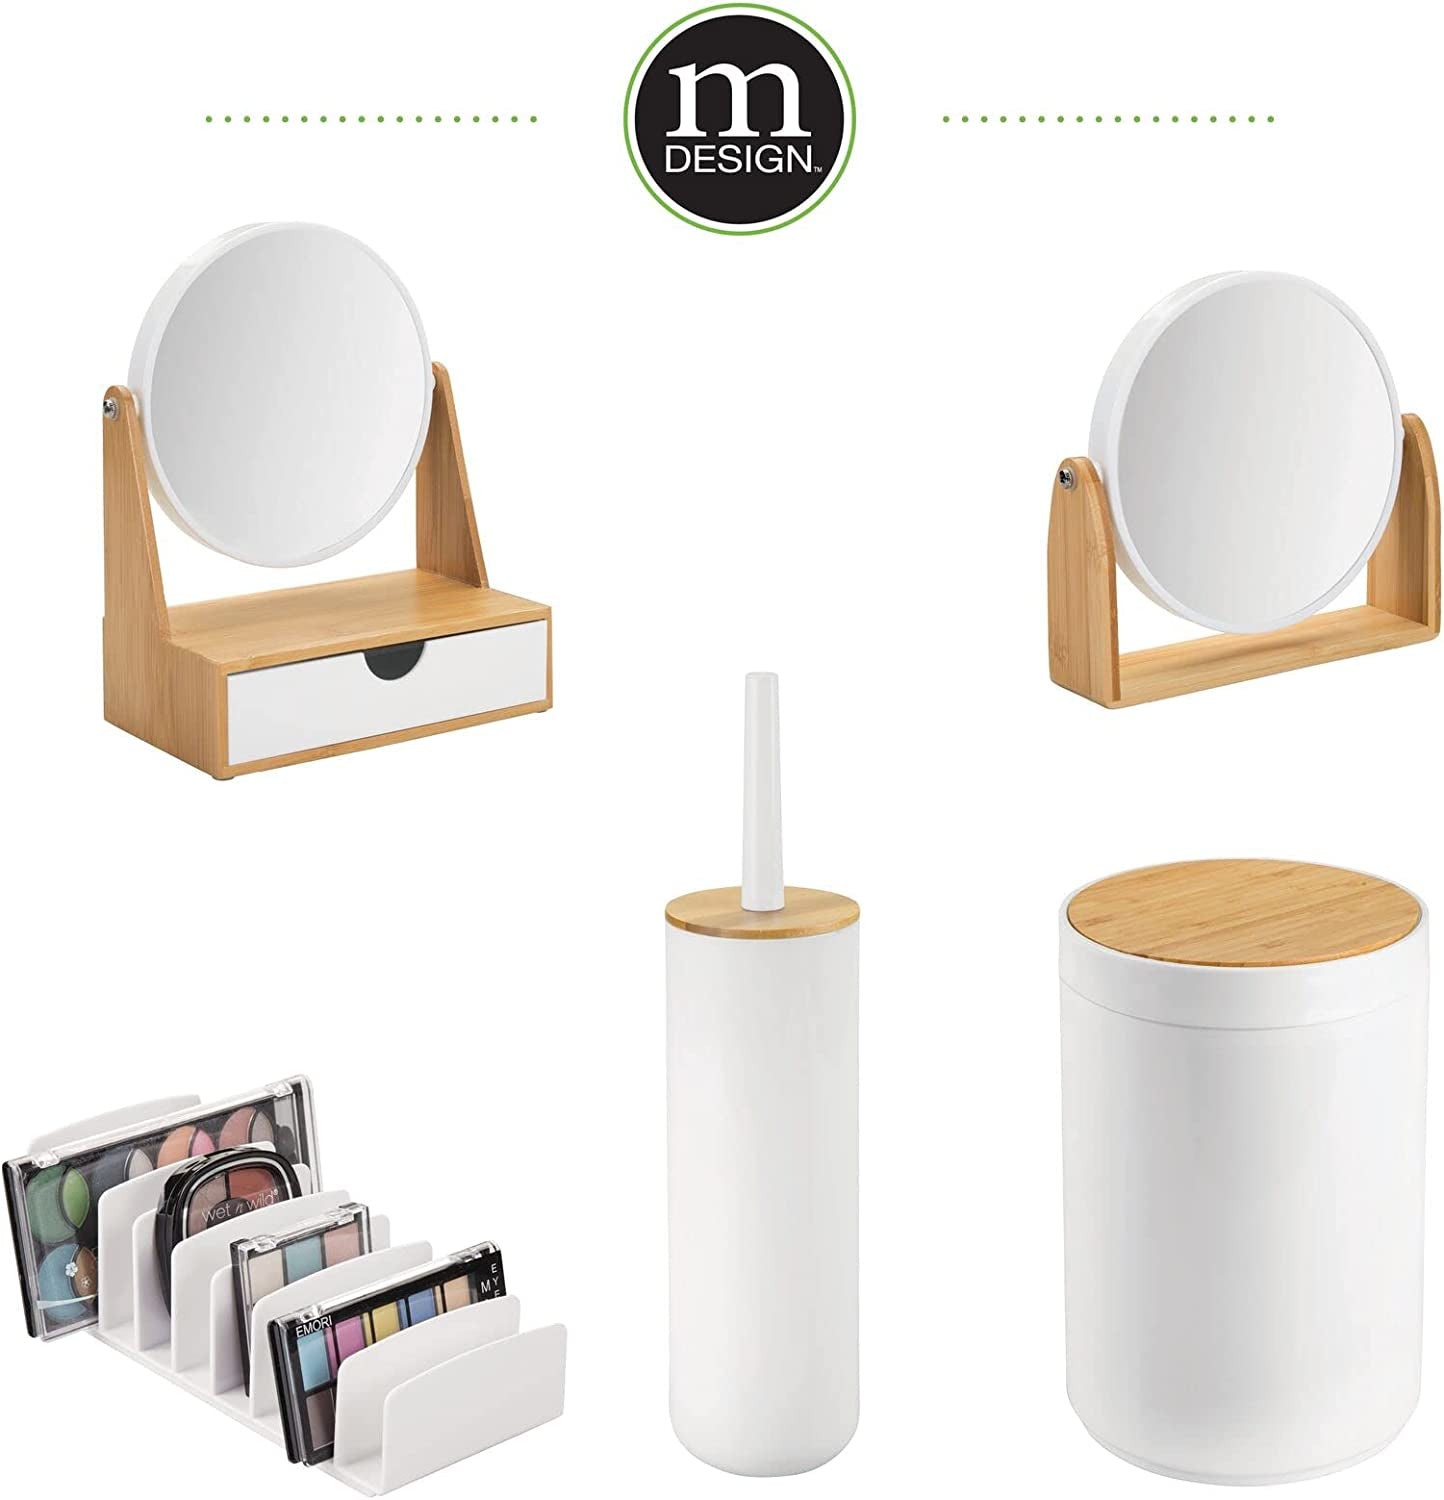 Swing Lid Bathroom Bin - Bamboo and Plastic Rubbish Bin for Bathroom - Small Trash Can - Bamboo and White